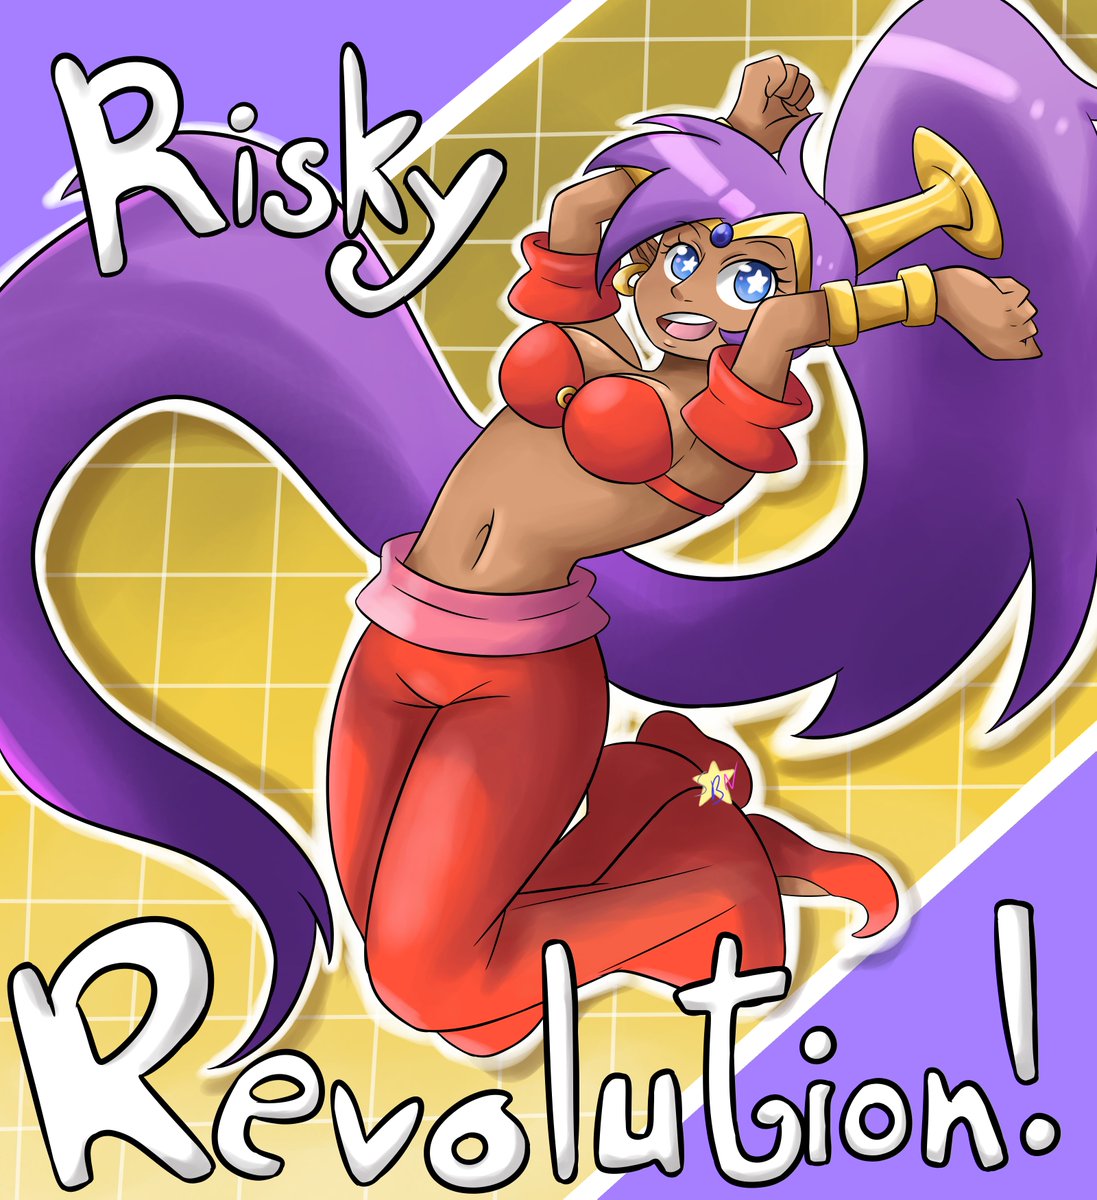 Realized I hadn't drawn fanart of #Shantae Risky Revolution and had to change that! @WayForward